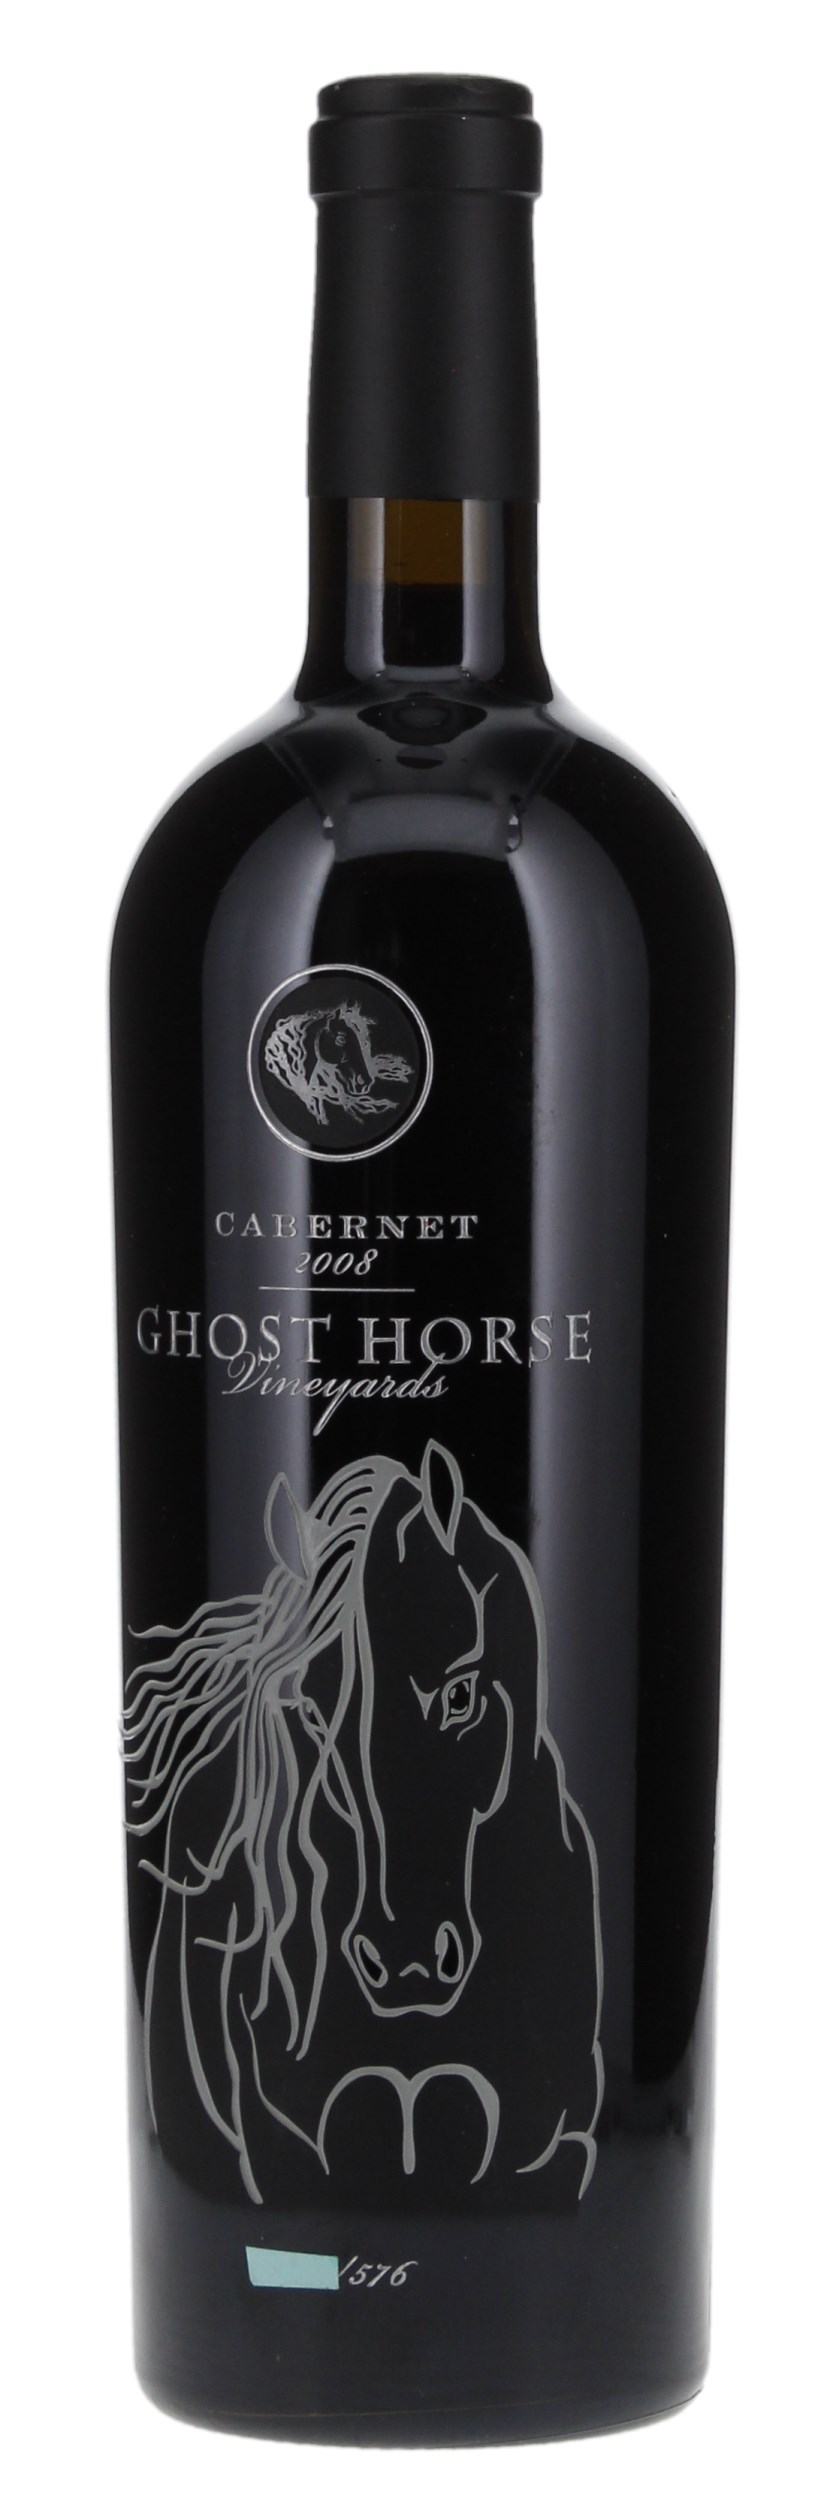 2008 Ghost Horse Vineyard Cabernet Sauvignon, 750ml